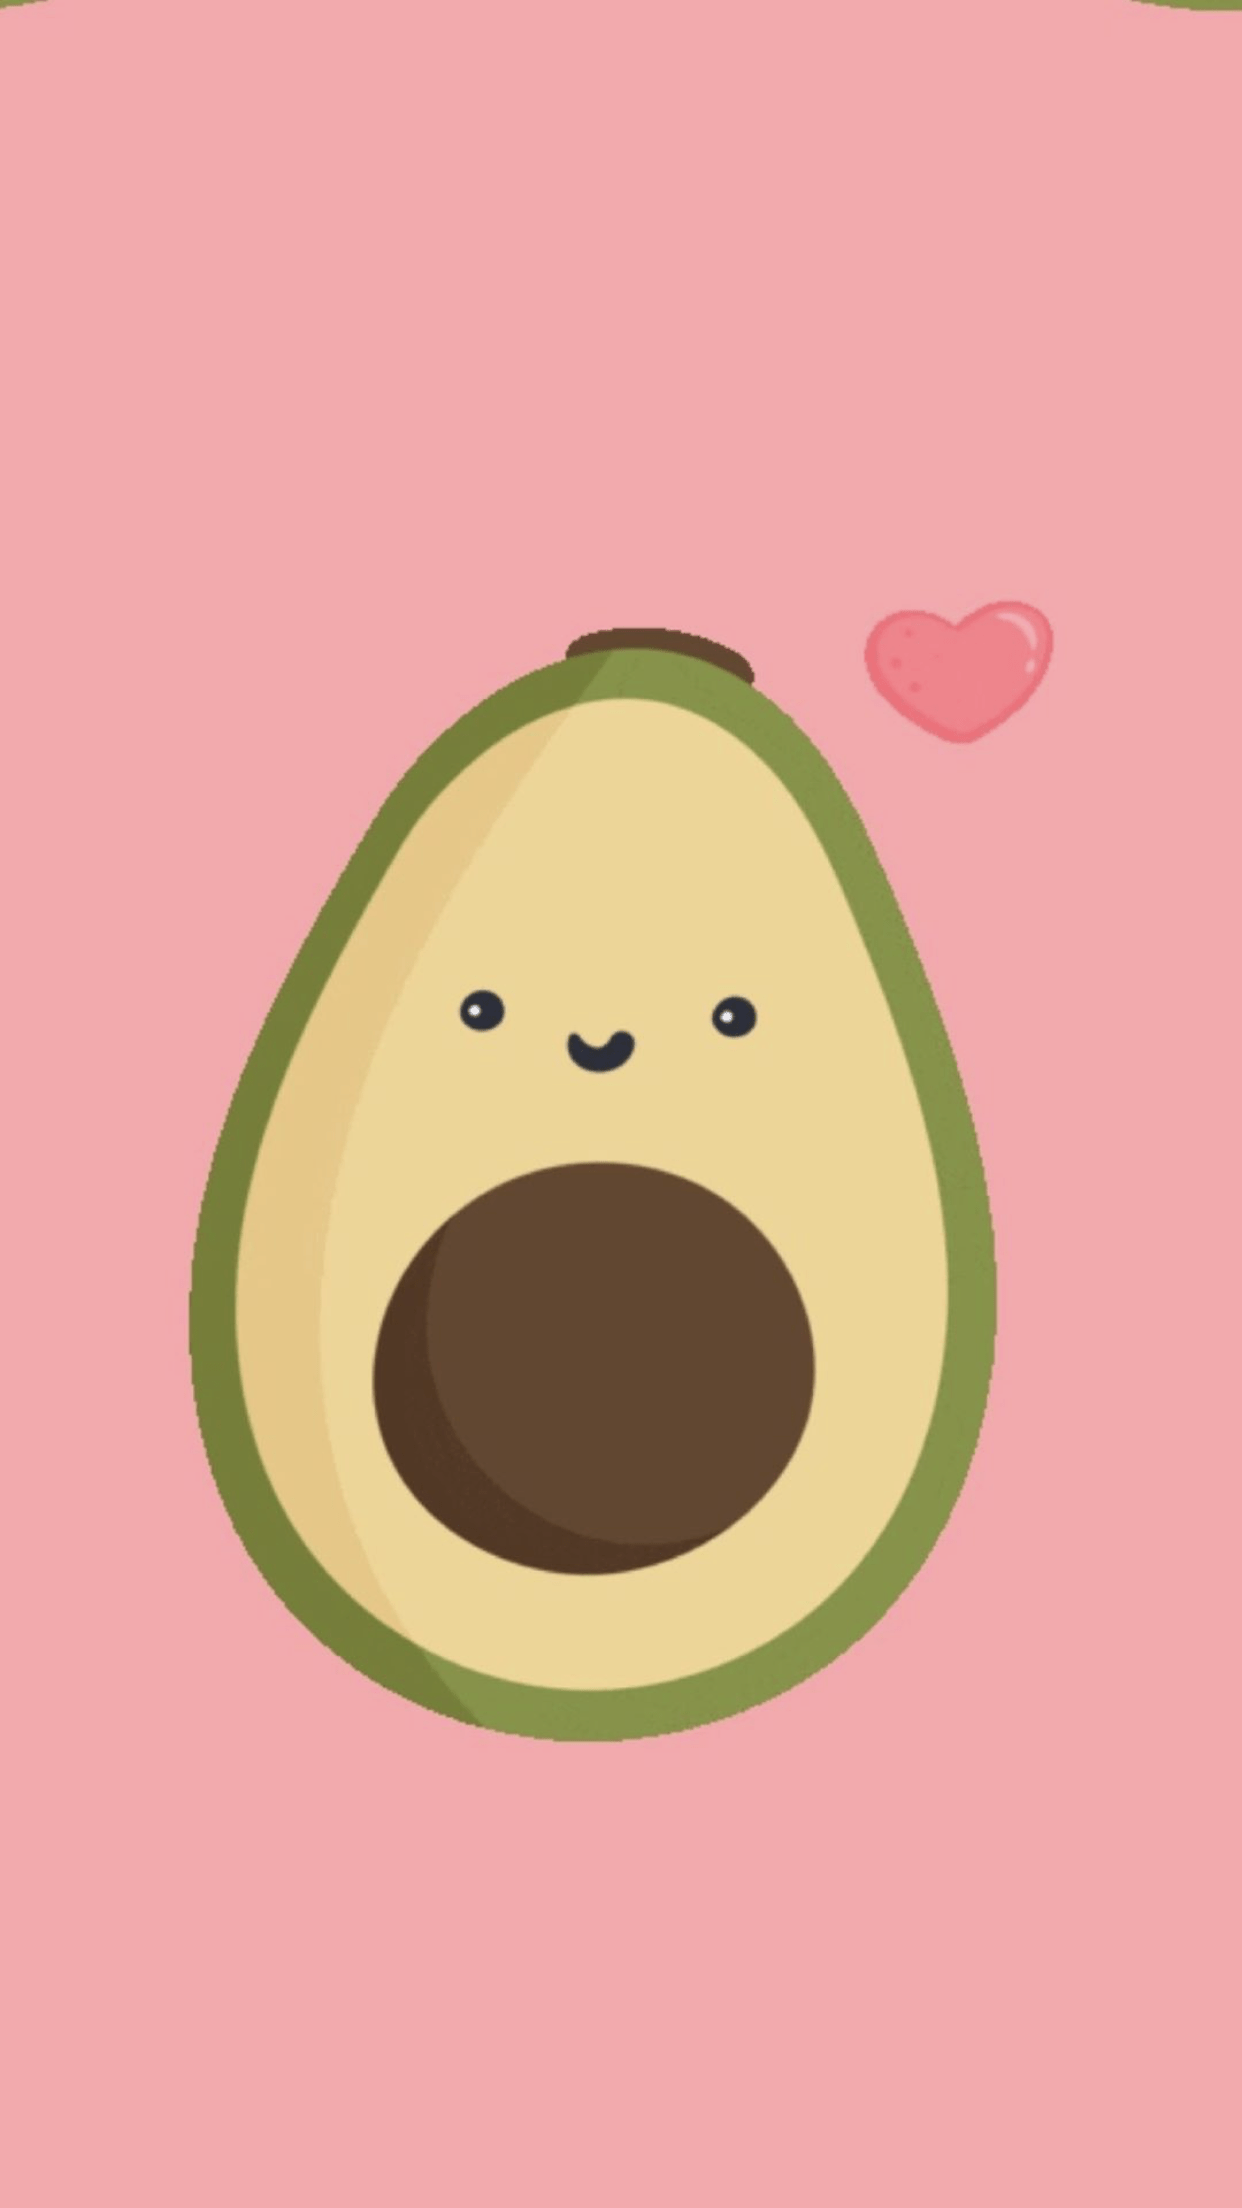 An avocado with a heart on it - Avocado